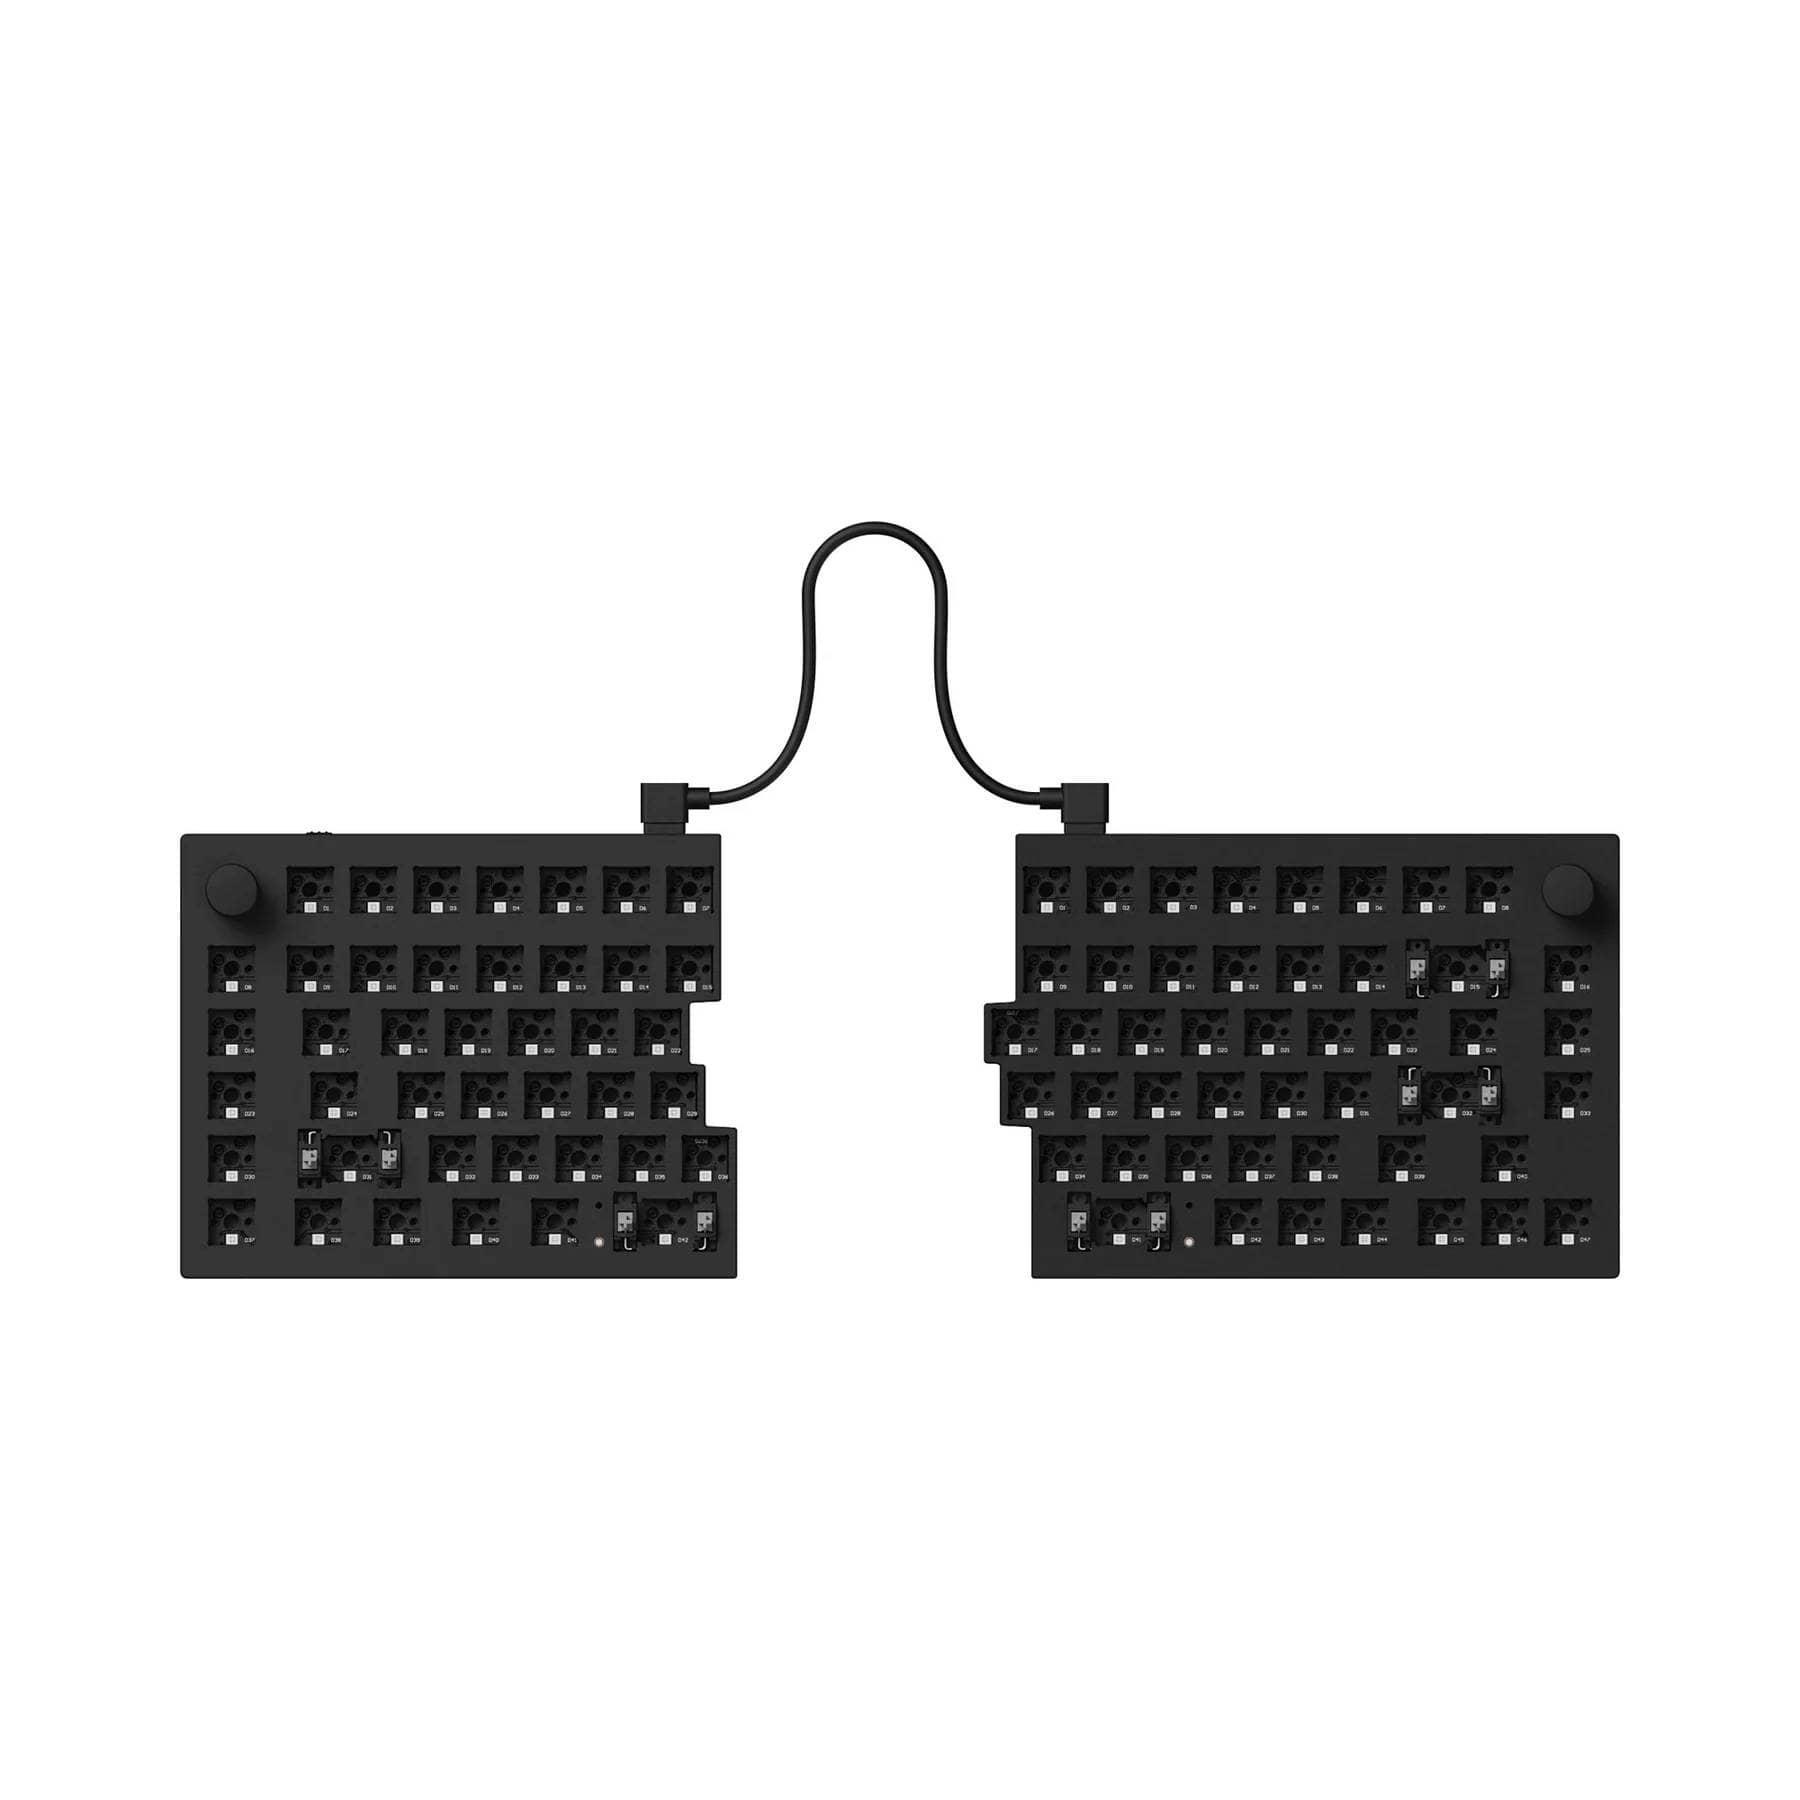 Keychron Q11 QMK VIA 75 percent split custom mechanical keyboard full aluminum frame for Mac Window Linux knob black